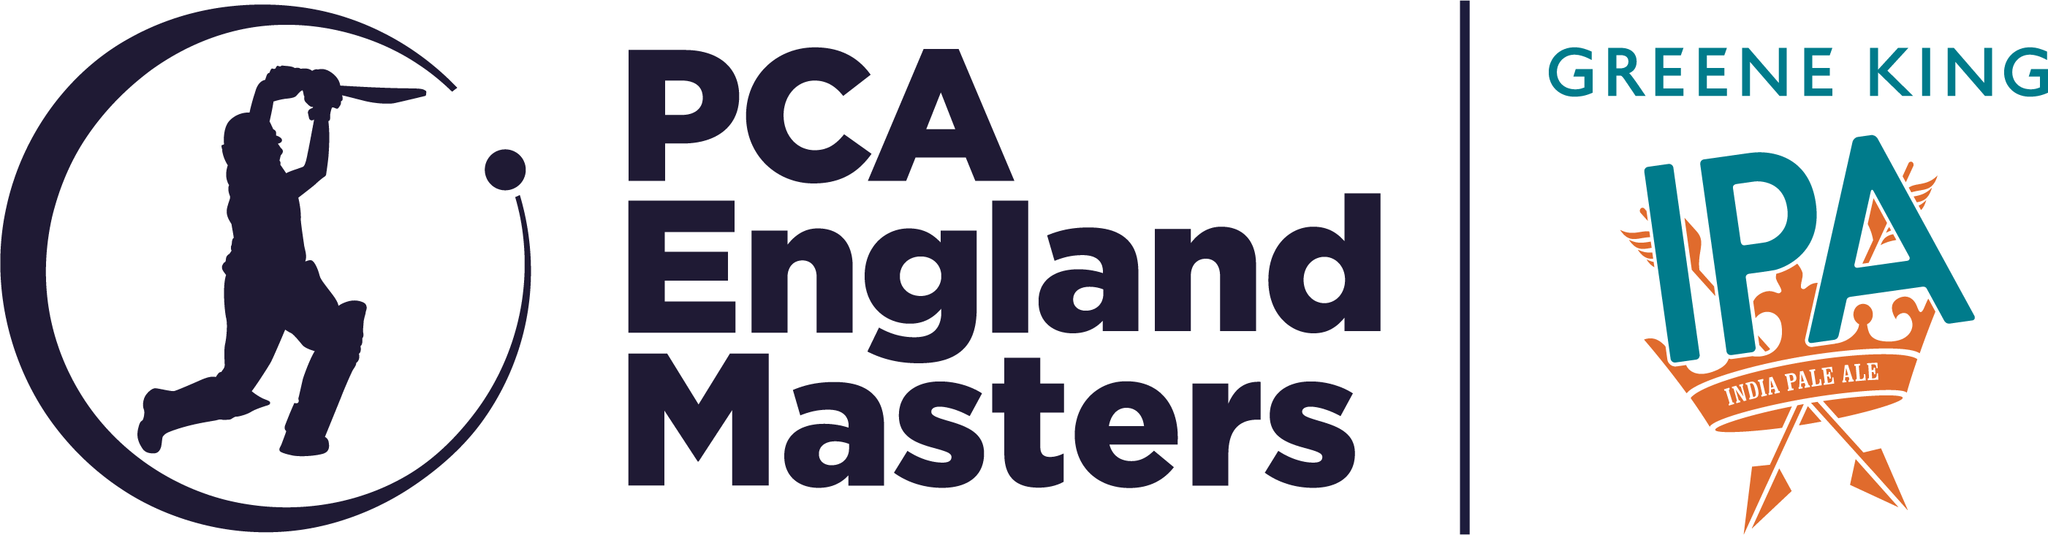 PCA England Masters